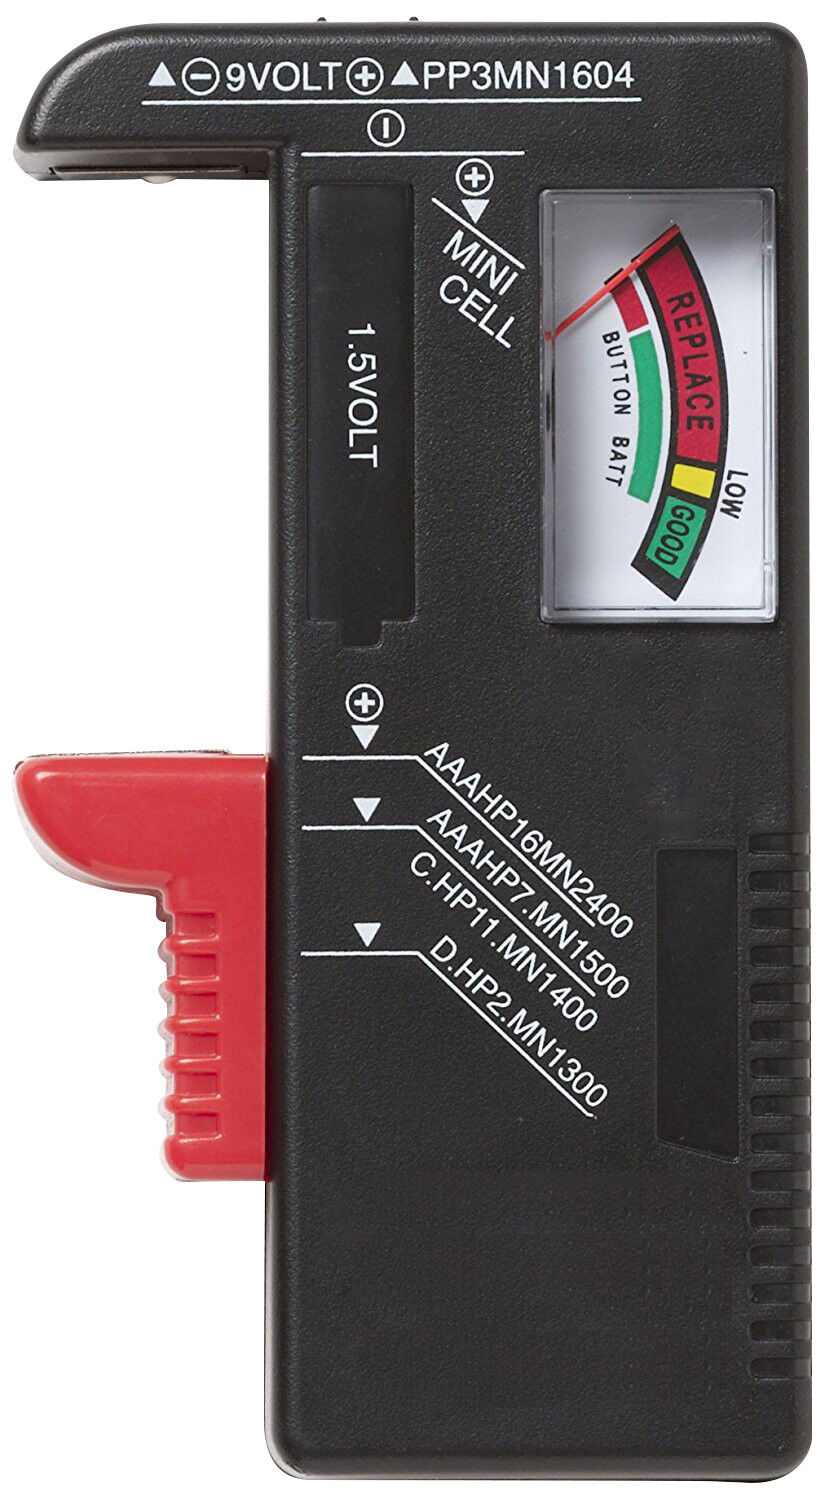 AA/AAA/C/D/9V Universal Button Cell Battery Volt Tester Checker US Seller 